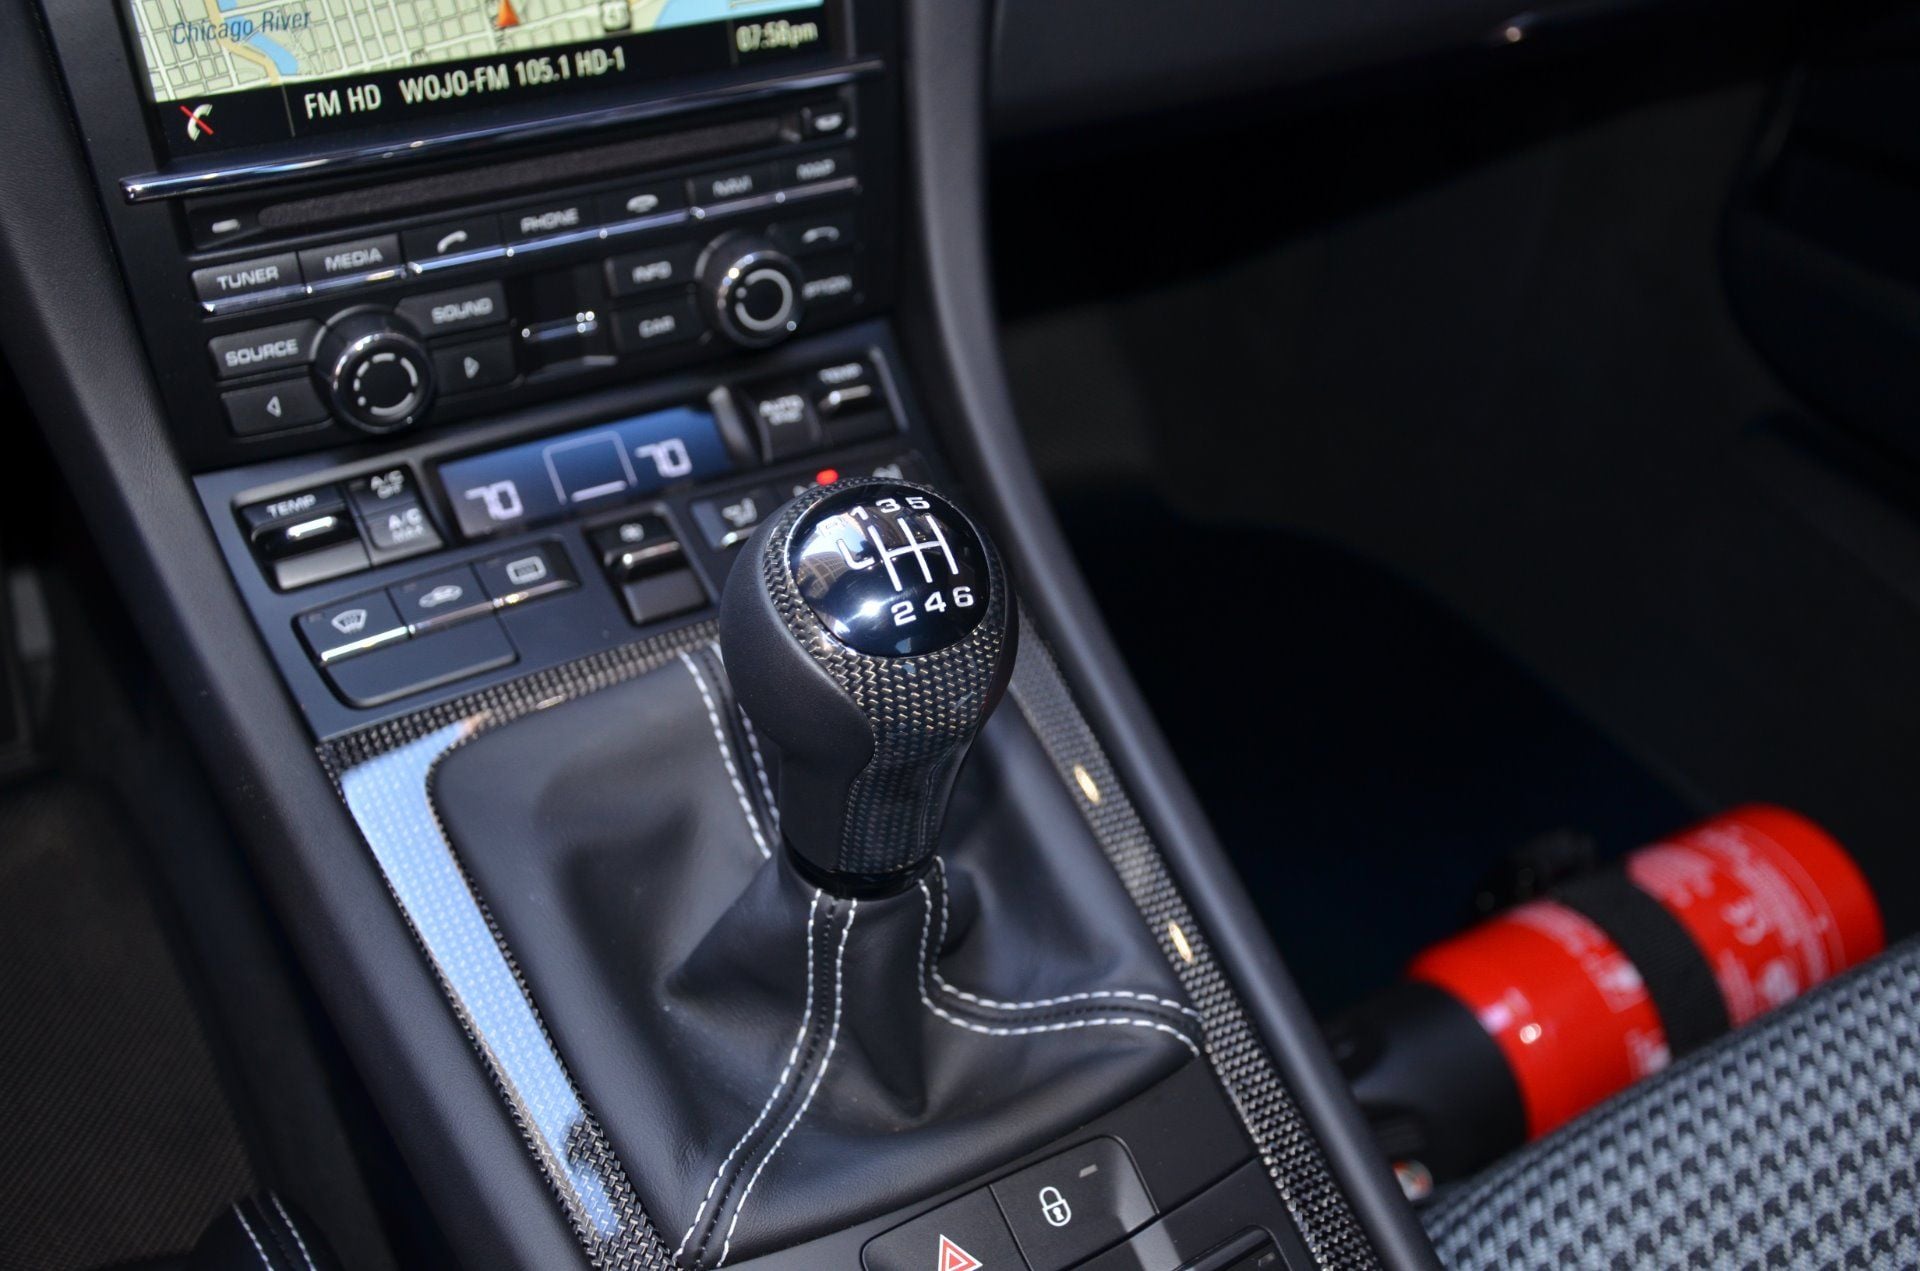 Interior/Upholstery - WTB: Porsche 911R Carbon Fiber Shift Knob - Used - 2016 to 2018 Porsche 911 - Seattle, WA 98144, United States